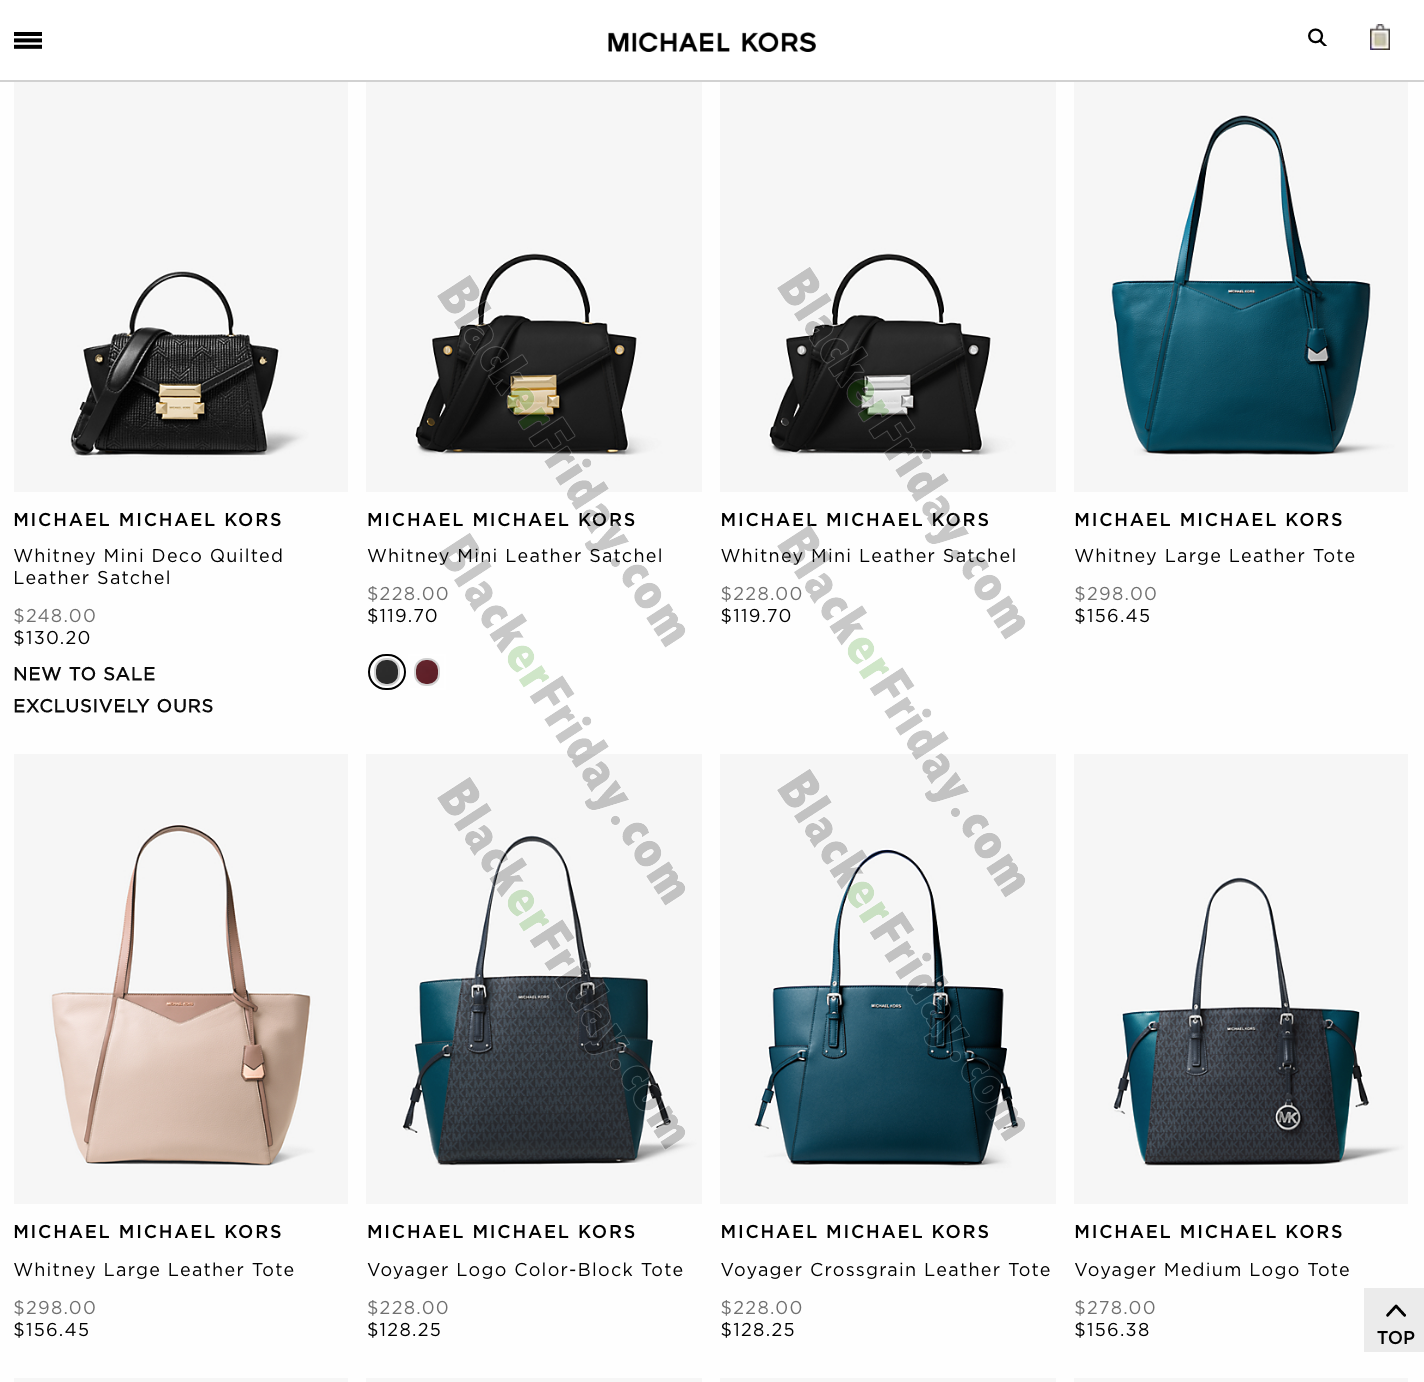 michael kors handbags outlet online clearance sale